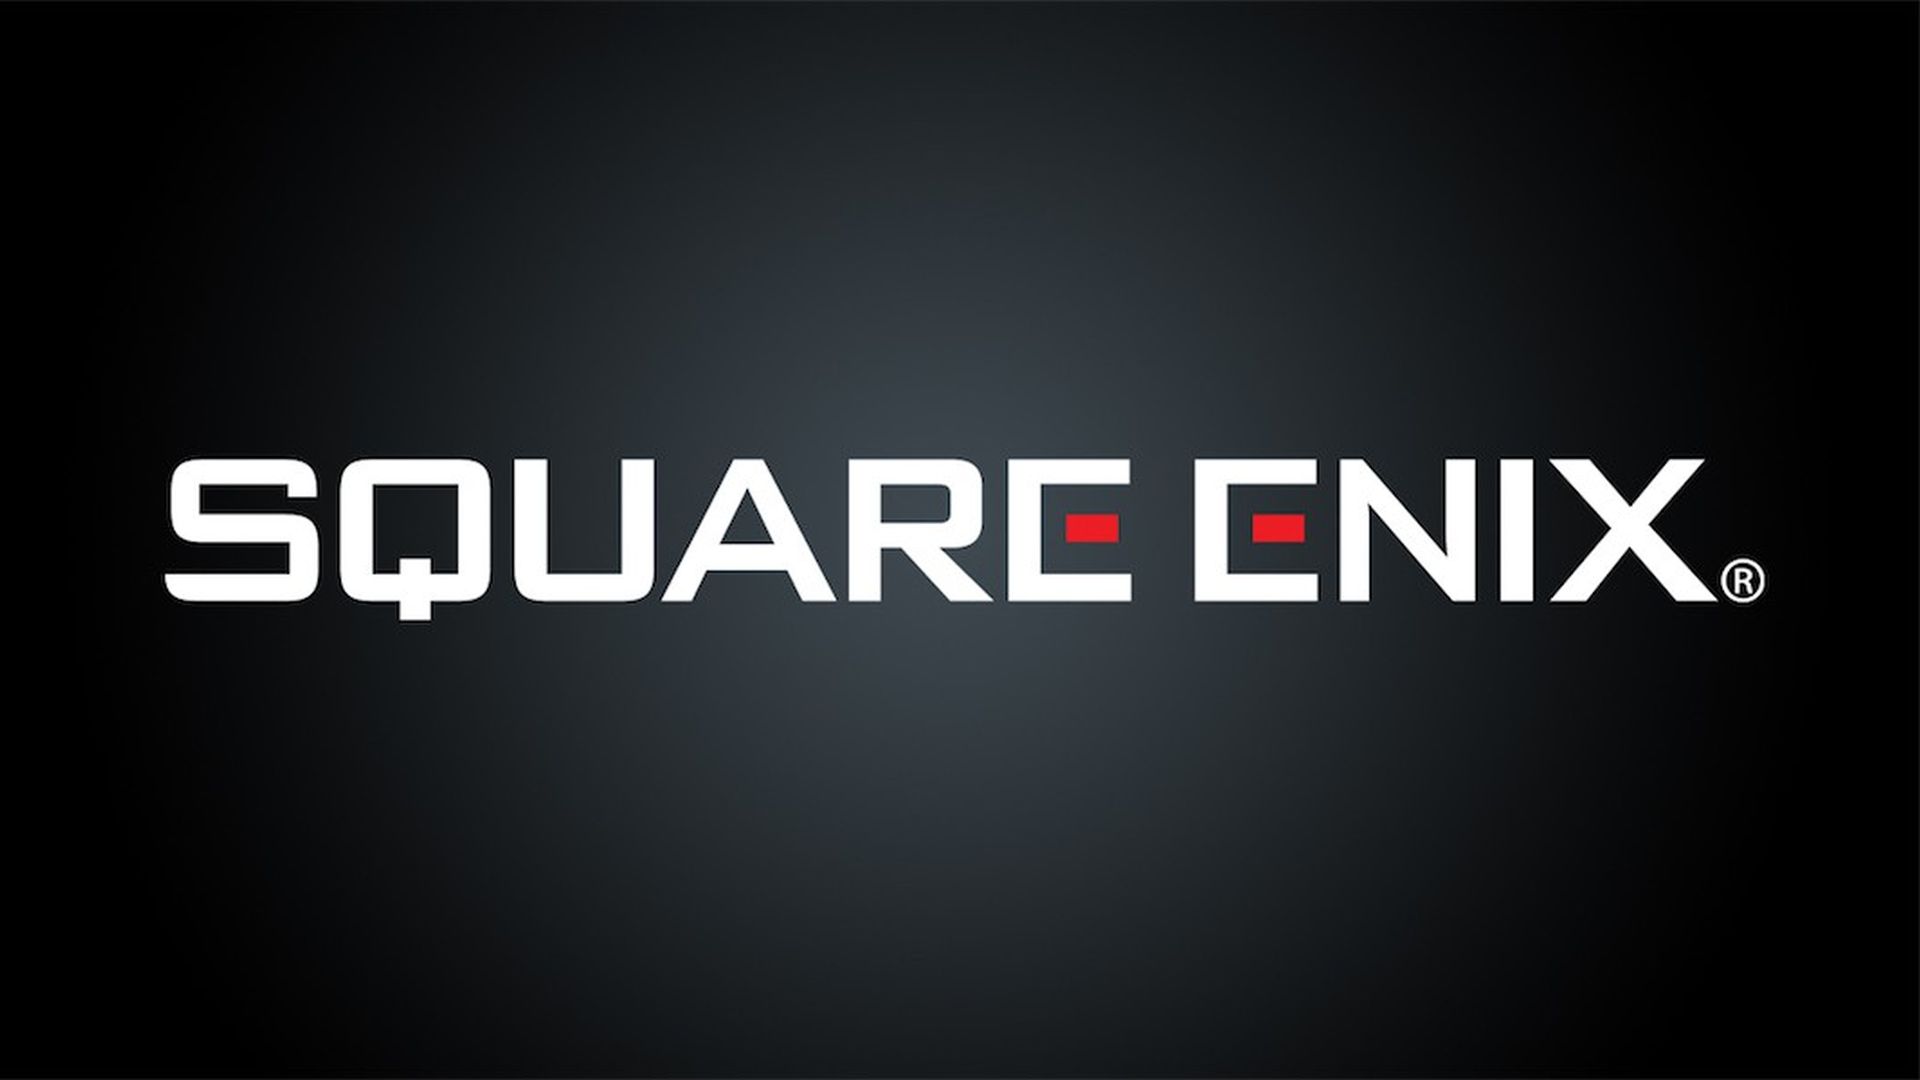 A Square Enix